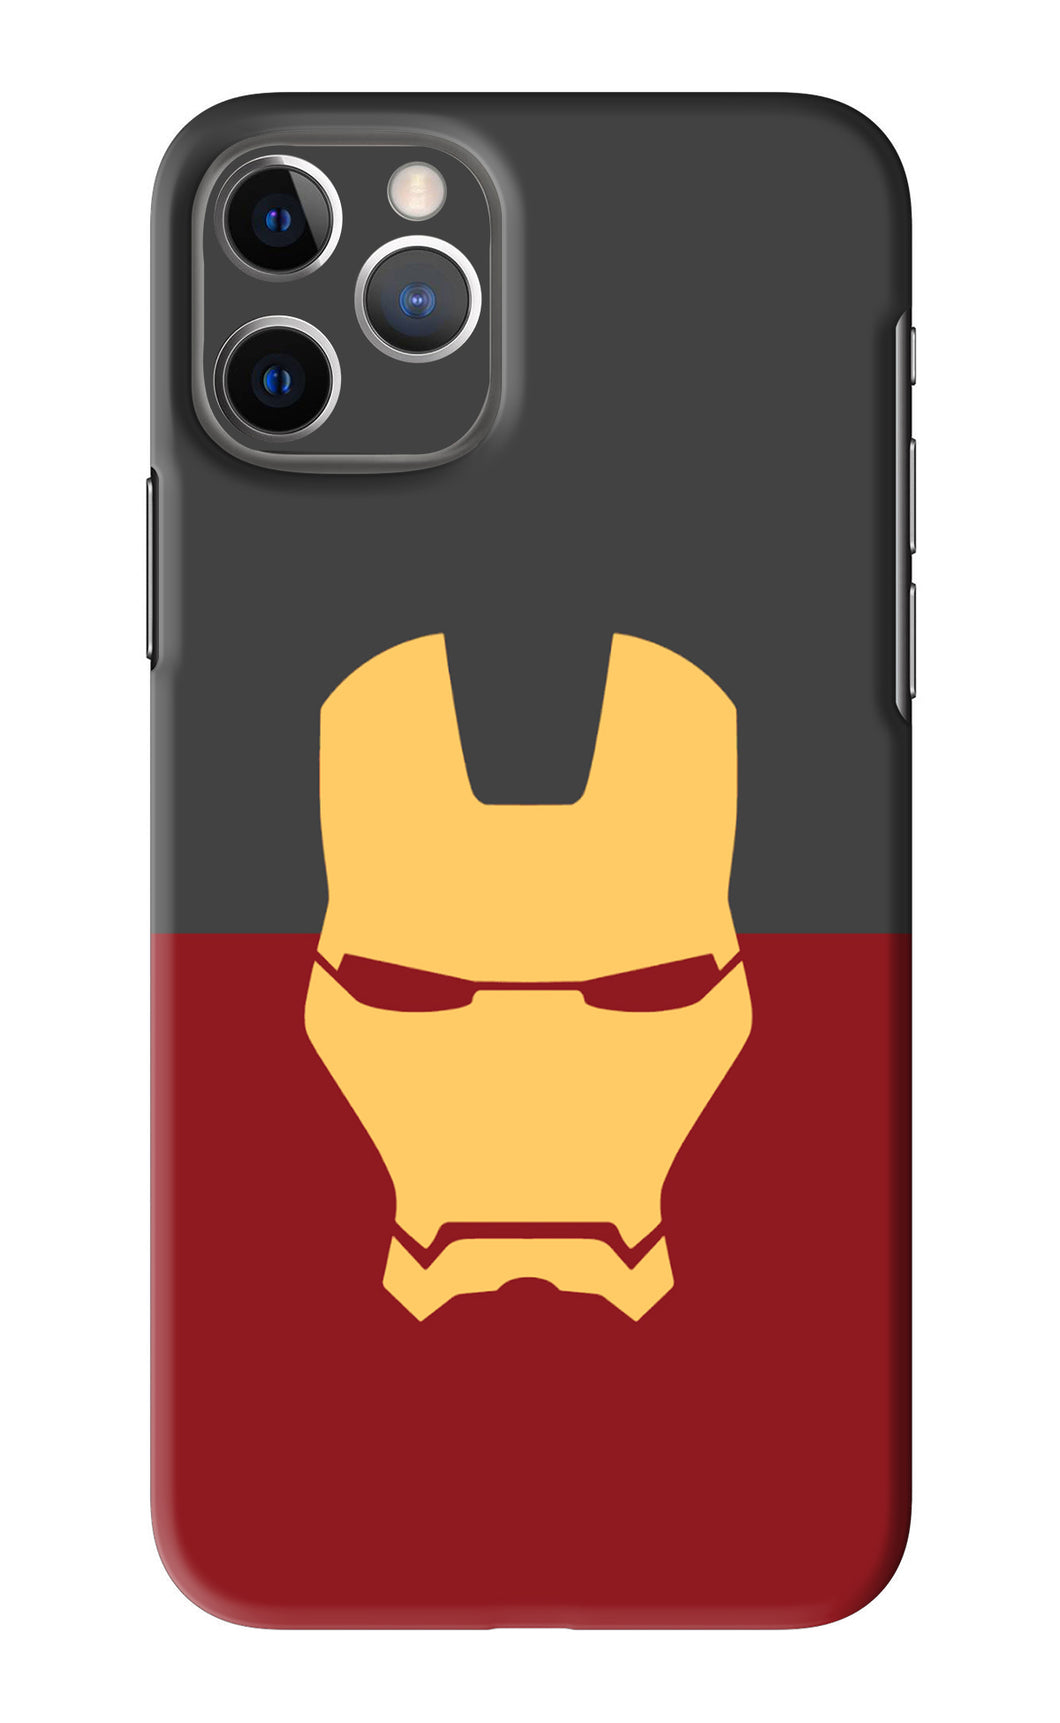 Ironman iPhone 11 Pro Max Back Skin Wrap